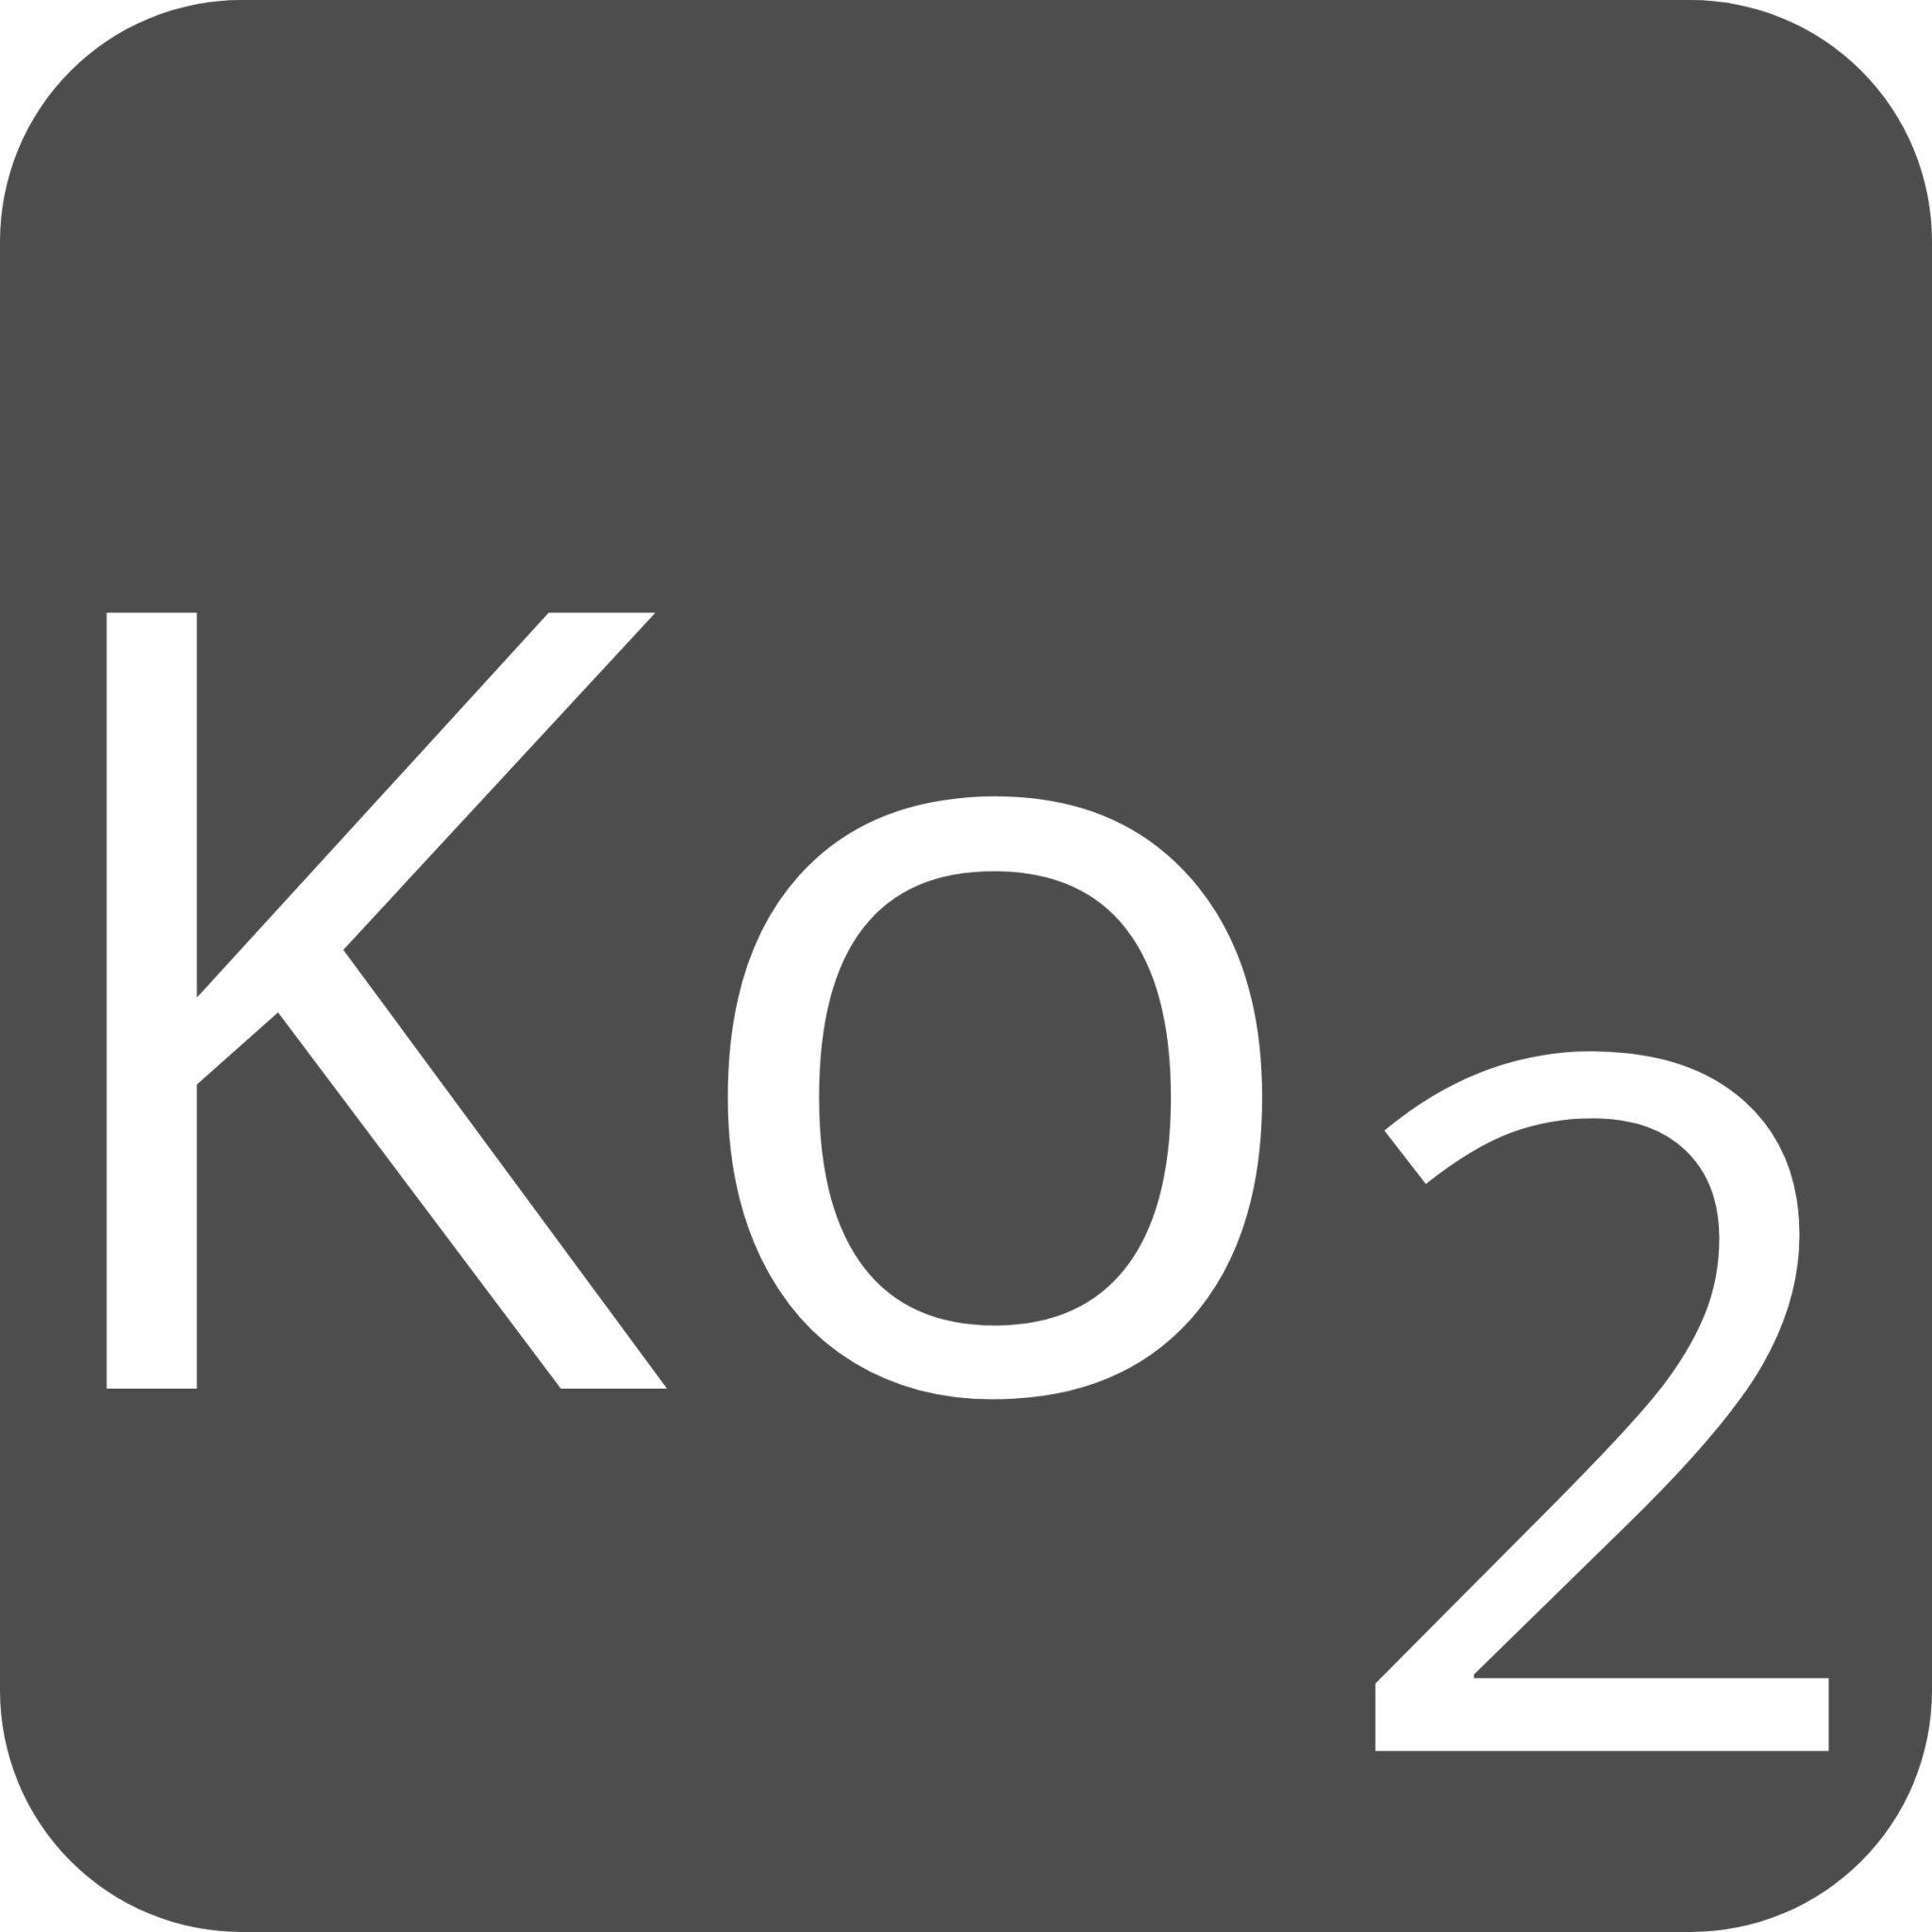 indicator keyboard Ko 2 icon